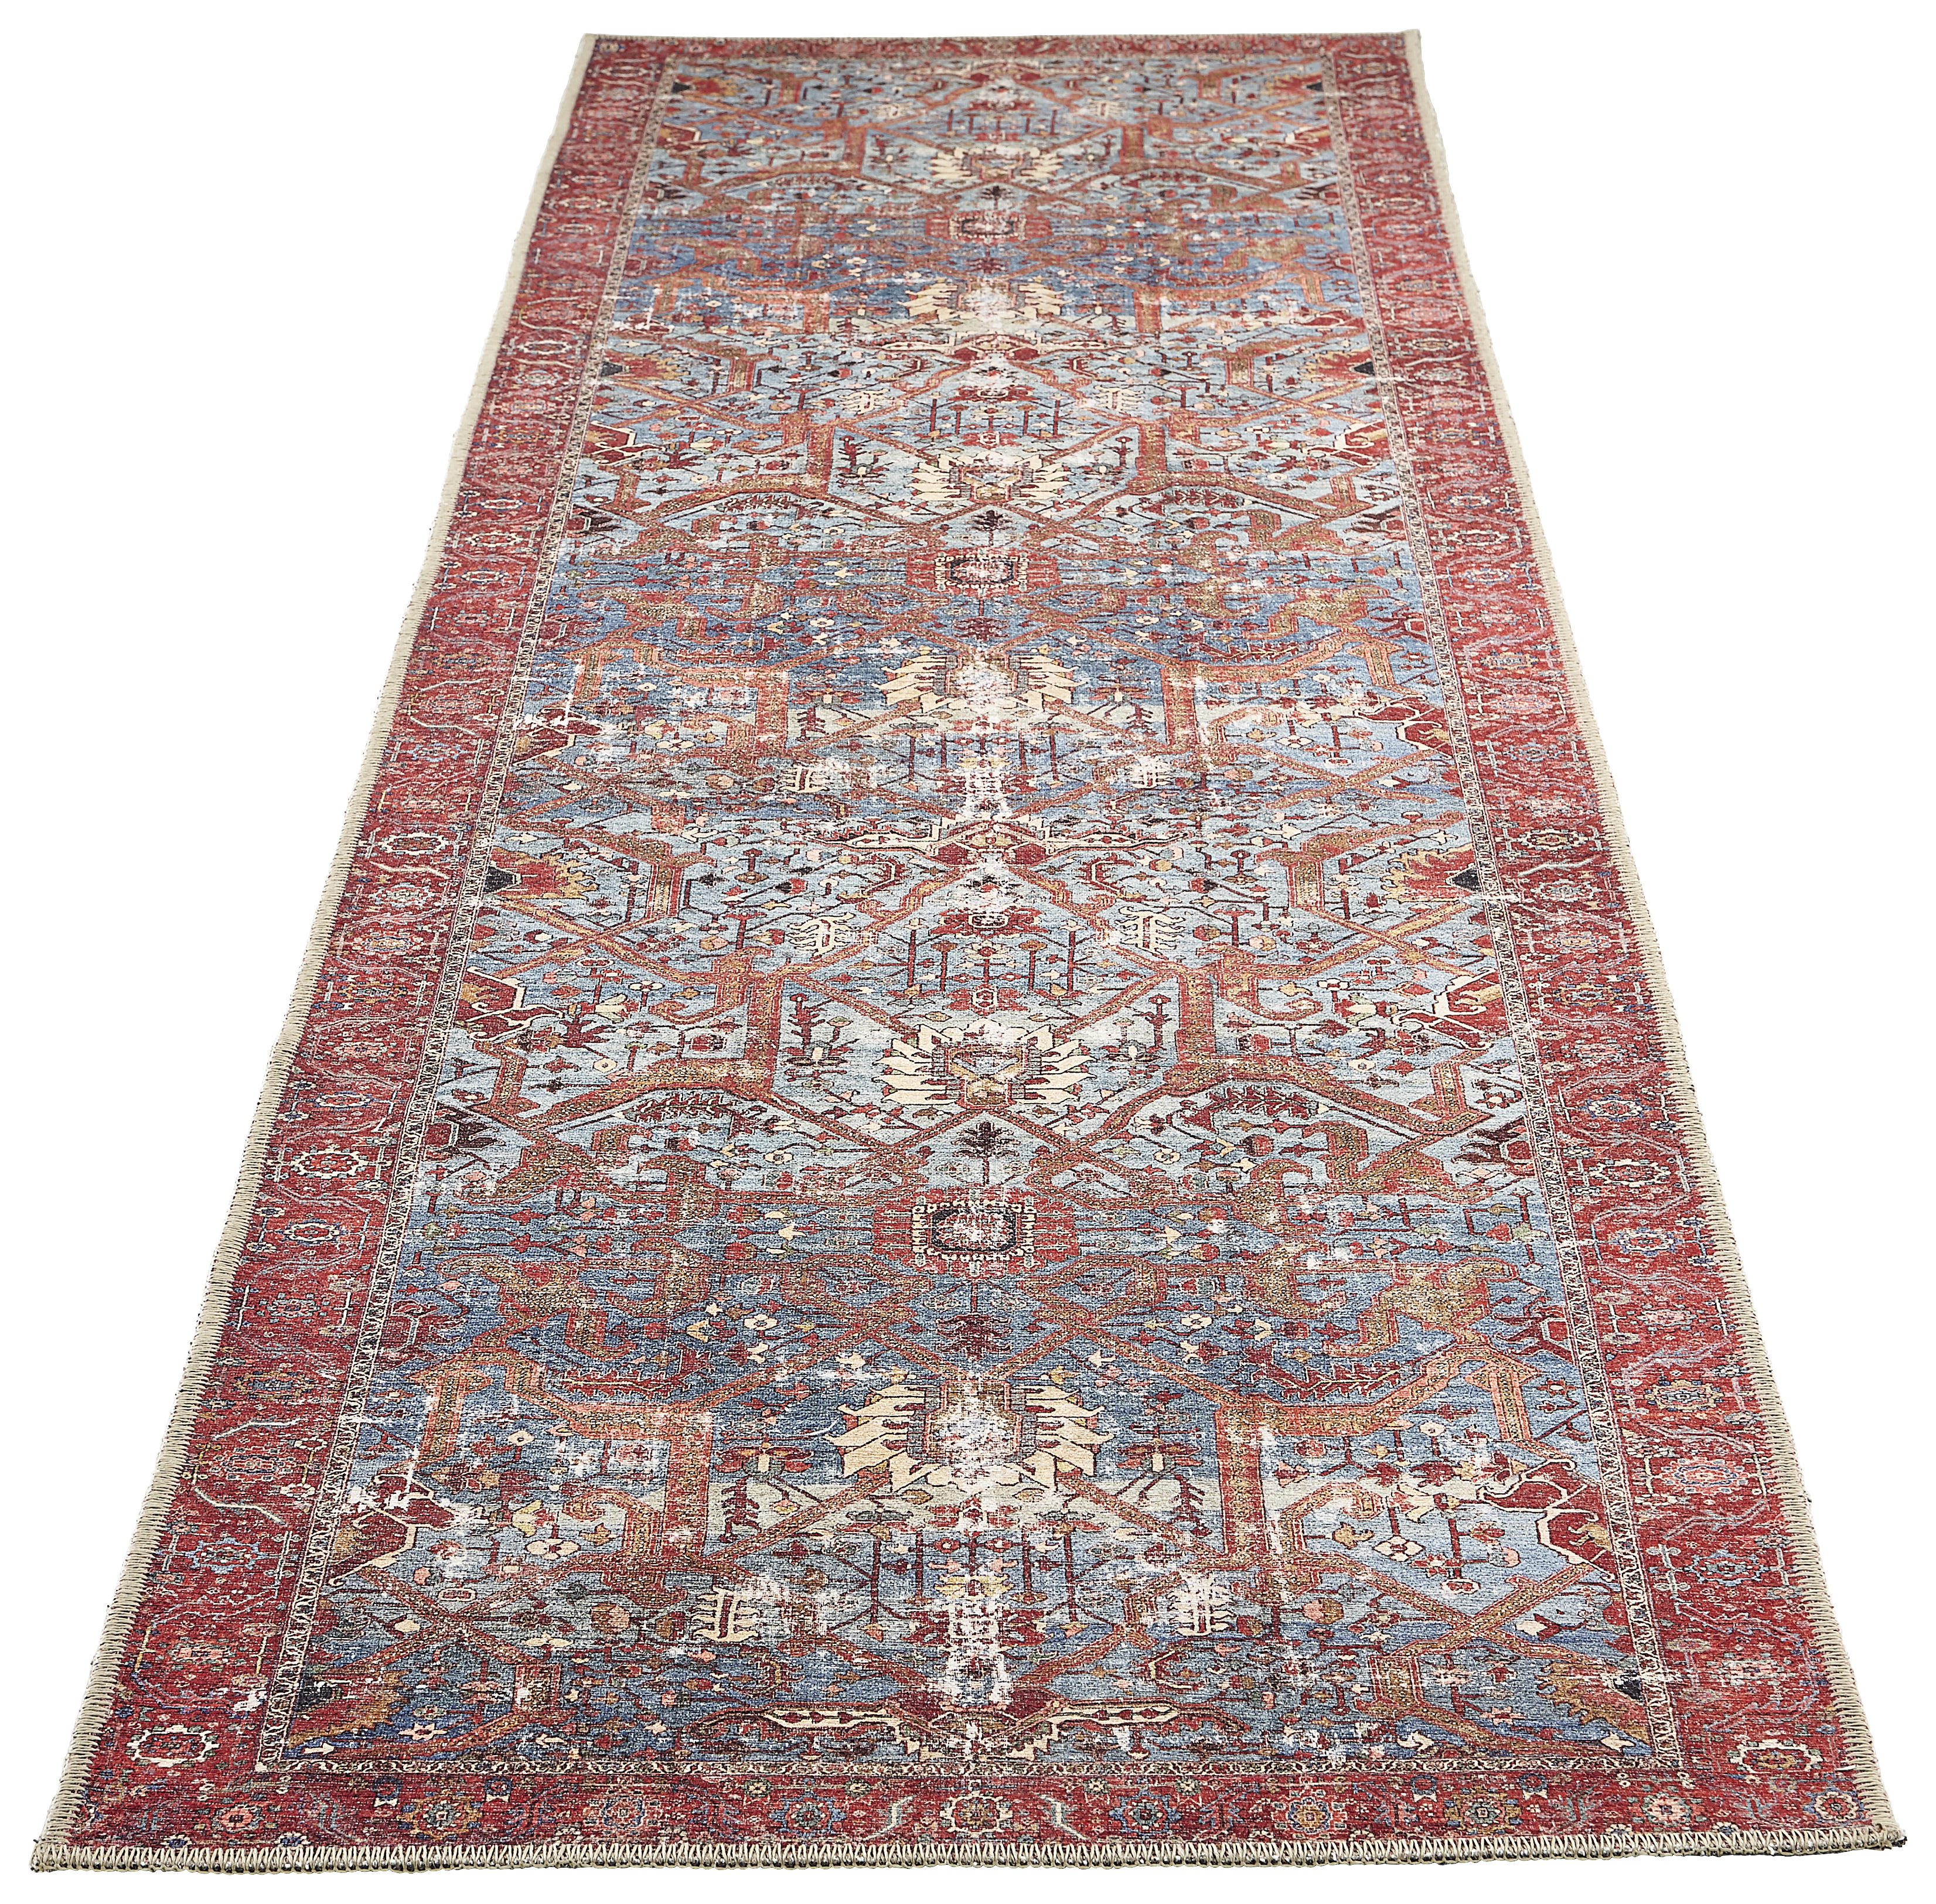 LÖPARE Azeri Antique  - röd/blå, Trend, textil (80/300cm) - Novel